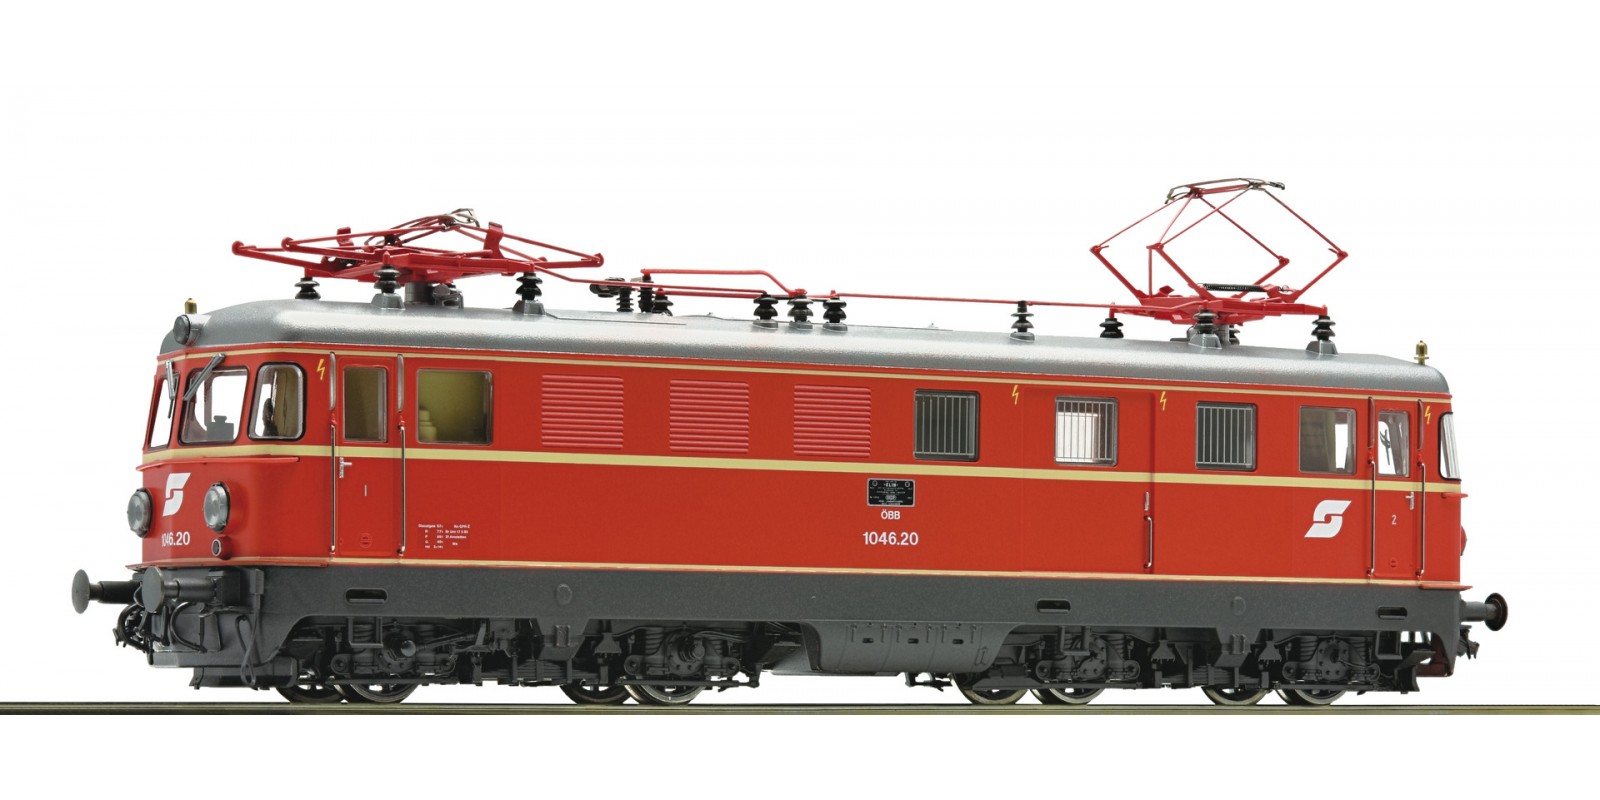 RO79291 - Electric locomotive class 1046, ÖBB - "The baggage carrying locomotive of ÖBB"